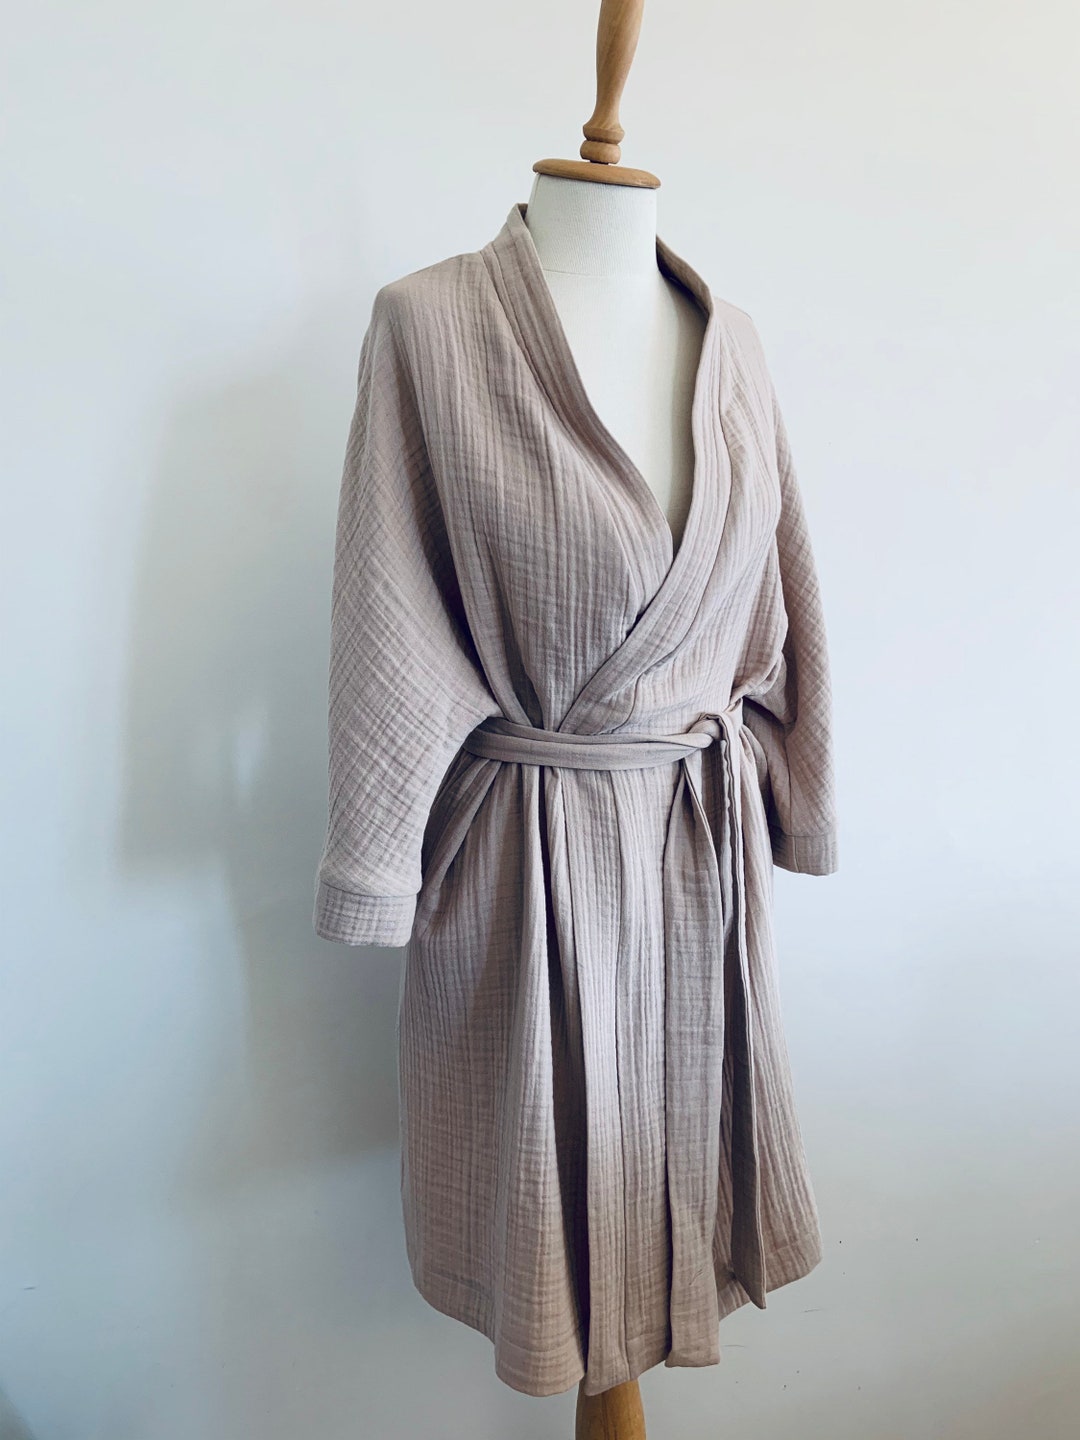 Bathrobe for Women 13 Colors Available Cotton Kimono Robe Soft Muslin ...